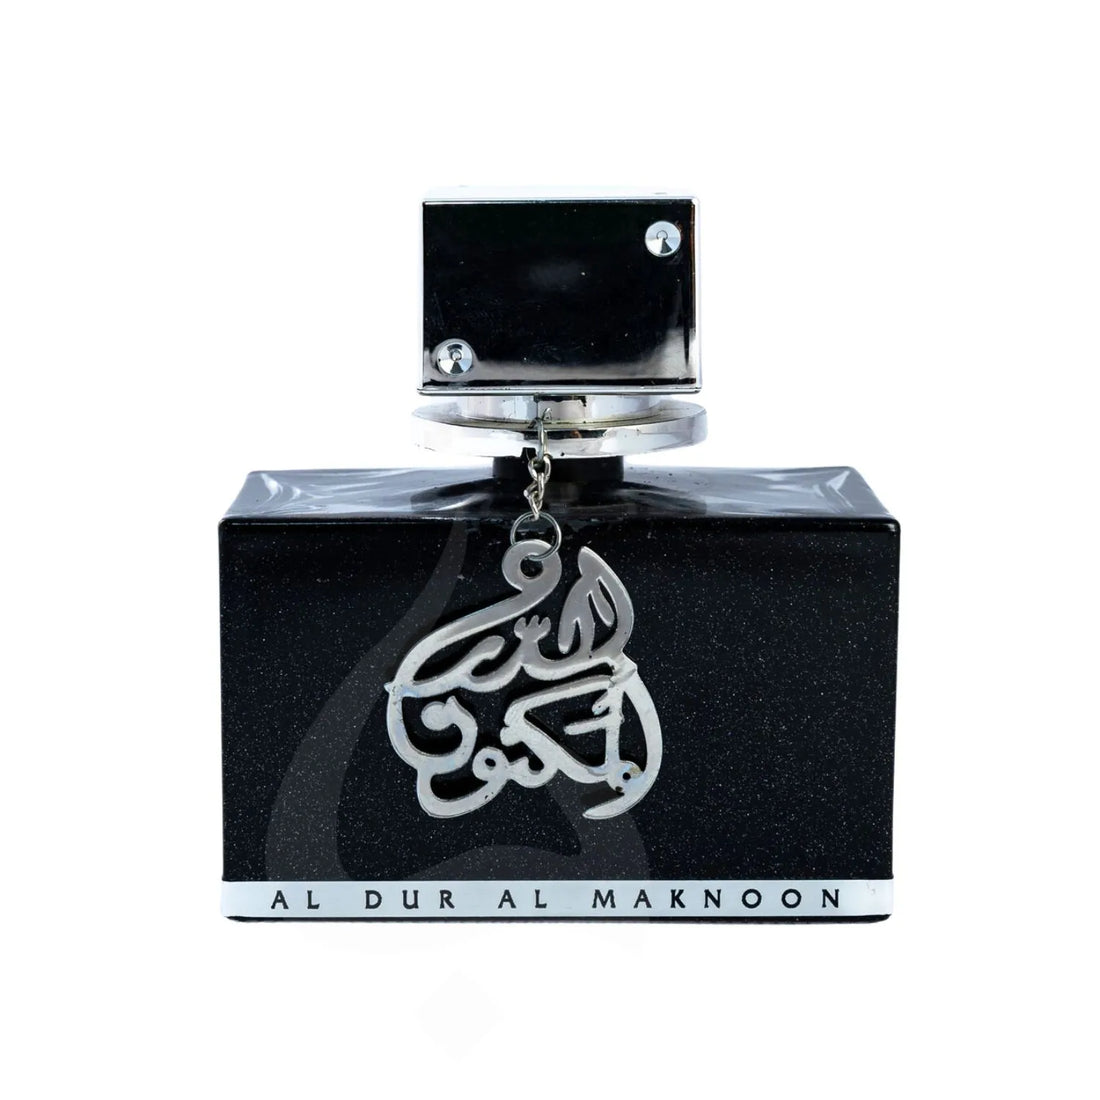 Al Dur Al Maknoon Perfume Bottle